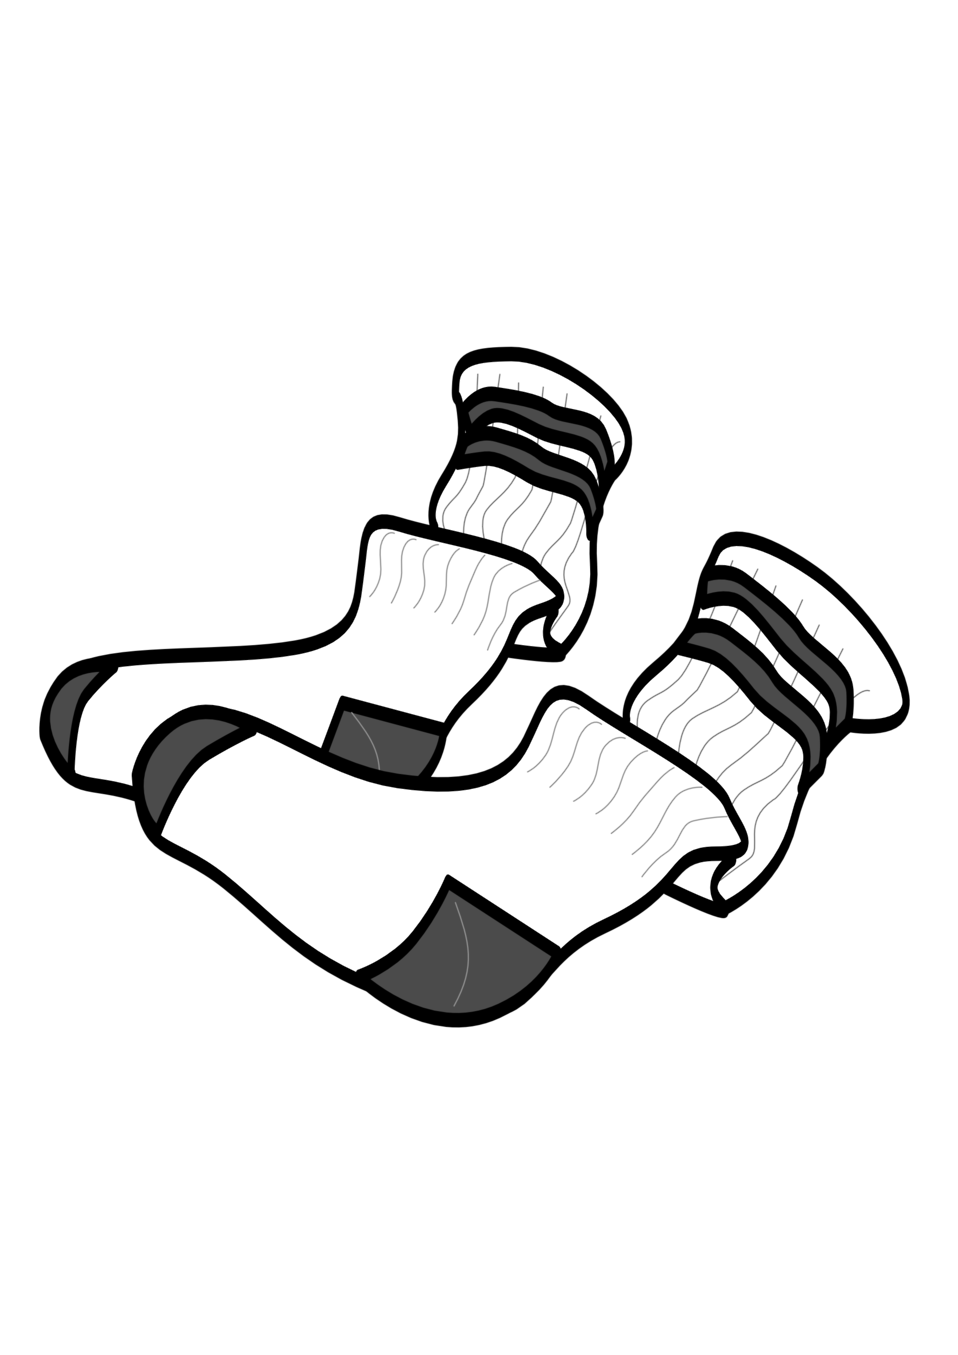 Public domain clip art. White clipart socks